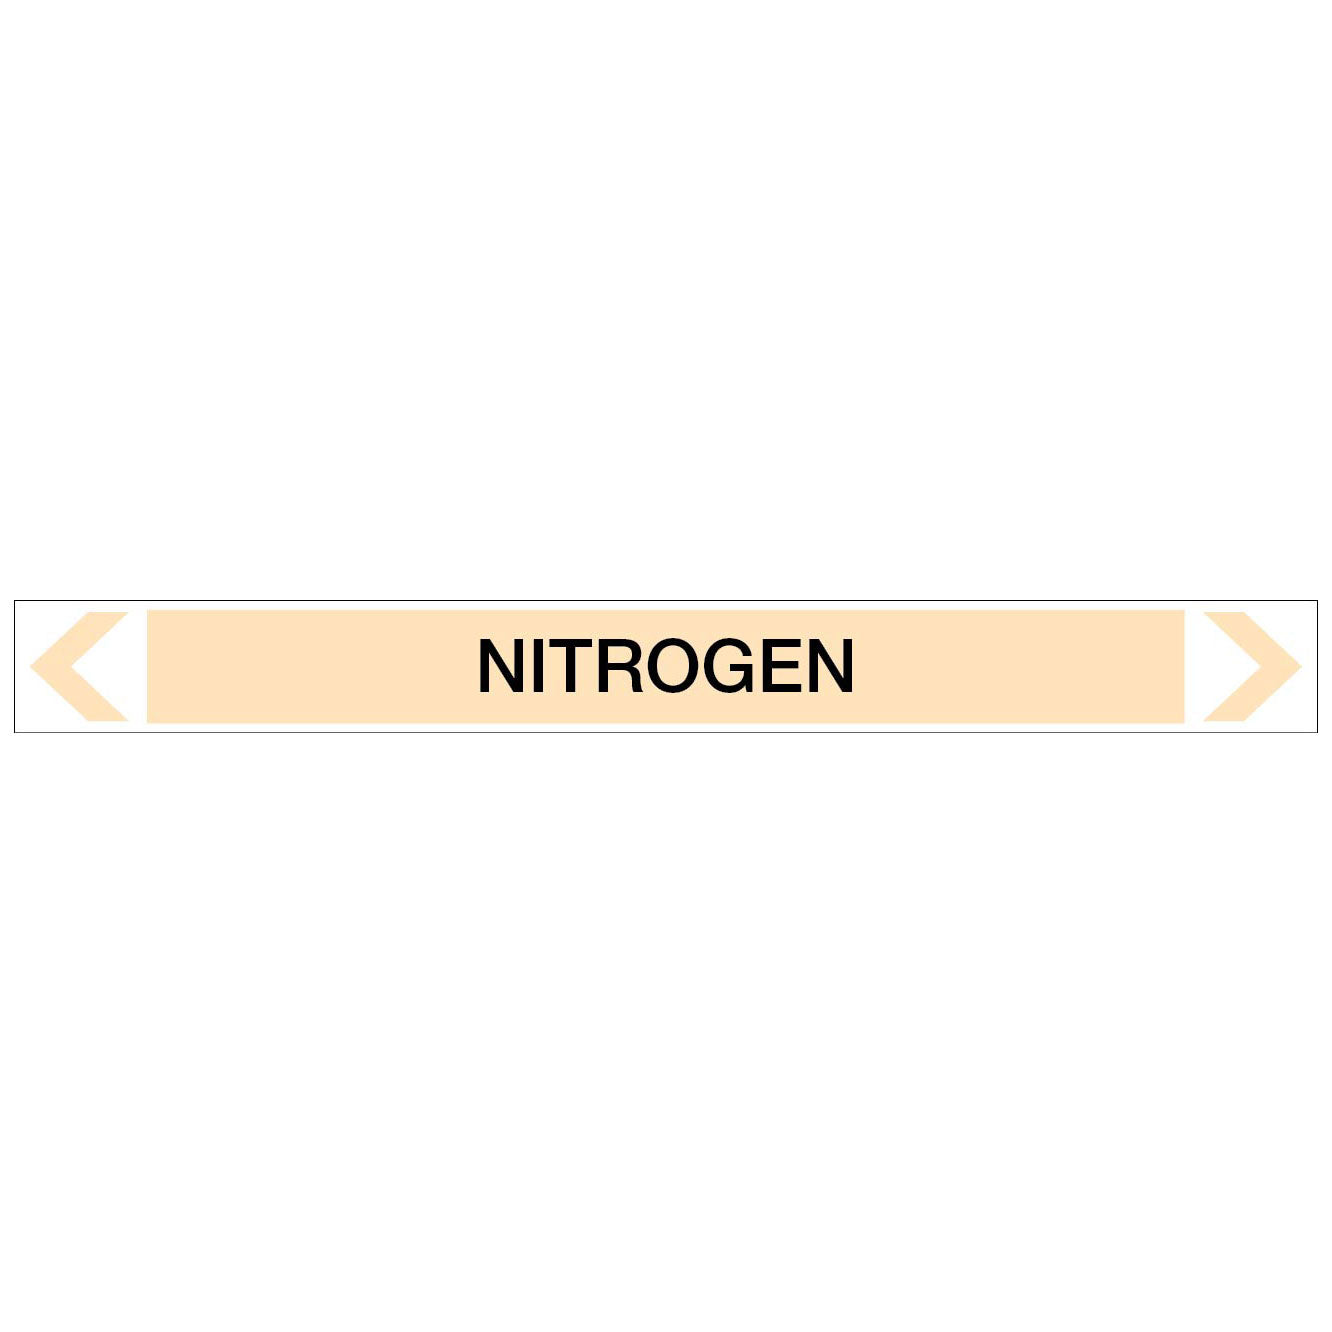 Gases - Nitrogen - Pipe Marker Sticker